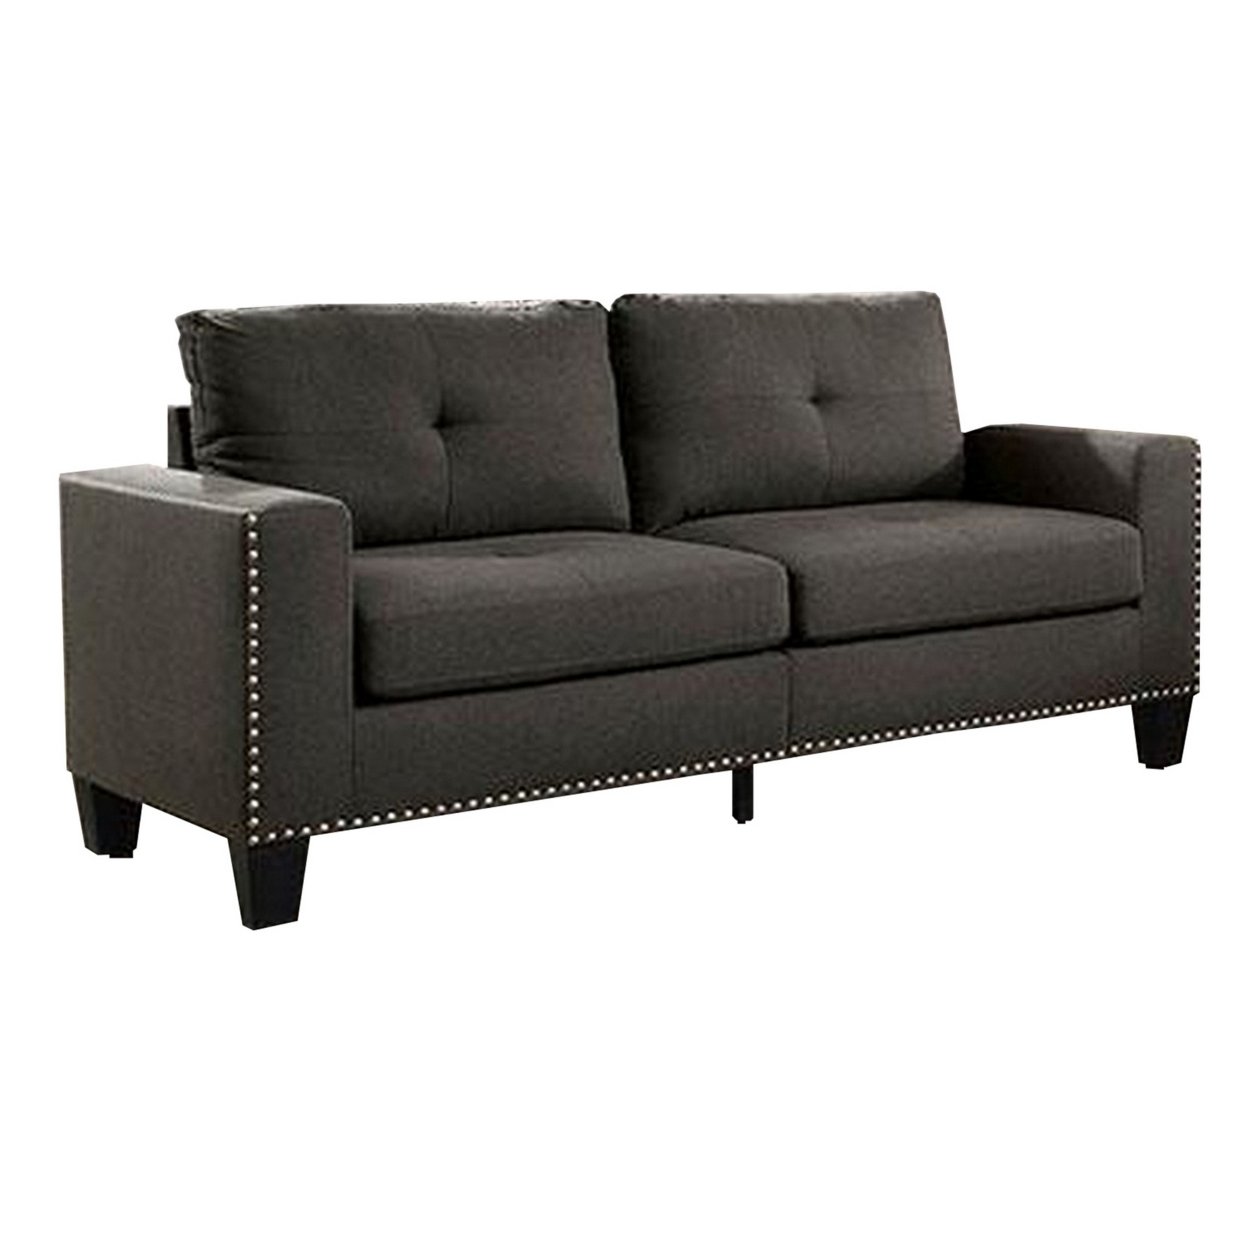 Fabric Upholstered Sofa With Track Arms And Nailhead Trim, Dark Gray- Saltoro Sherpi